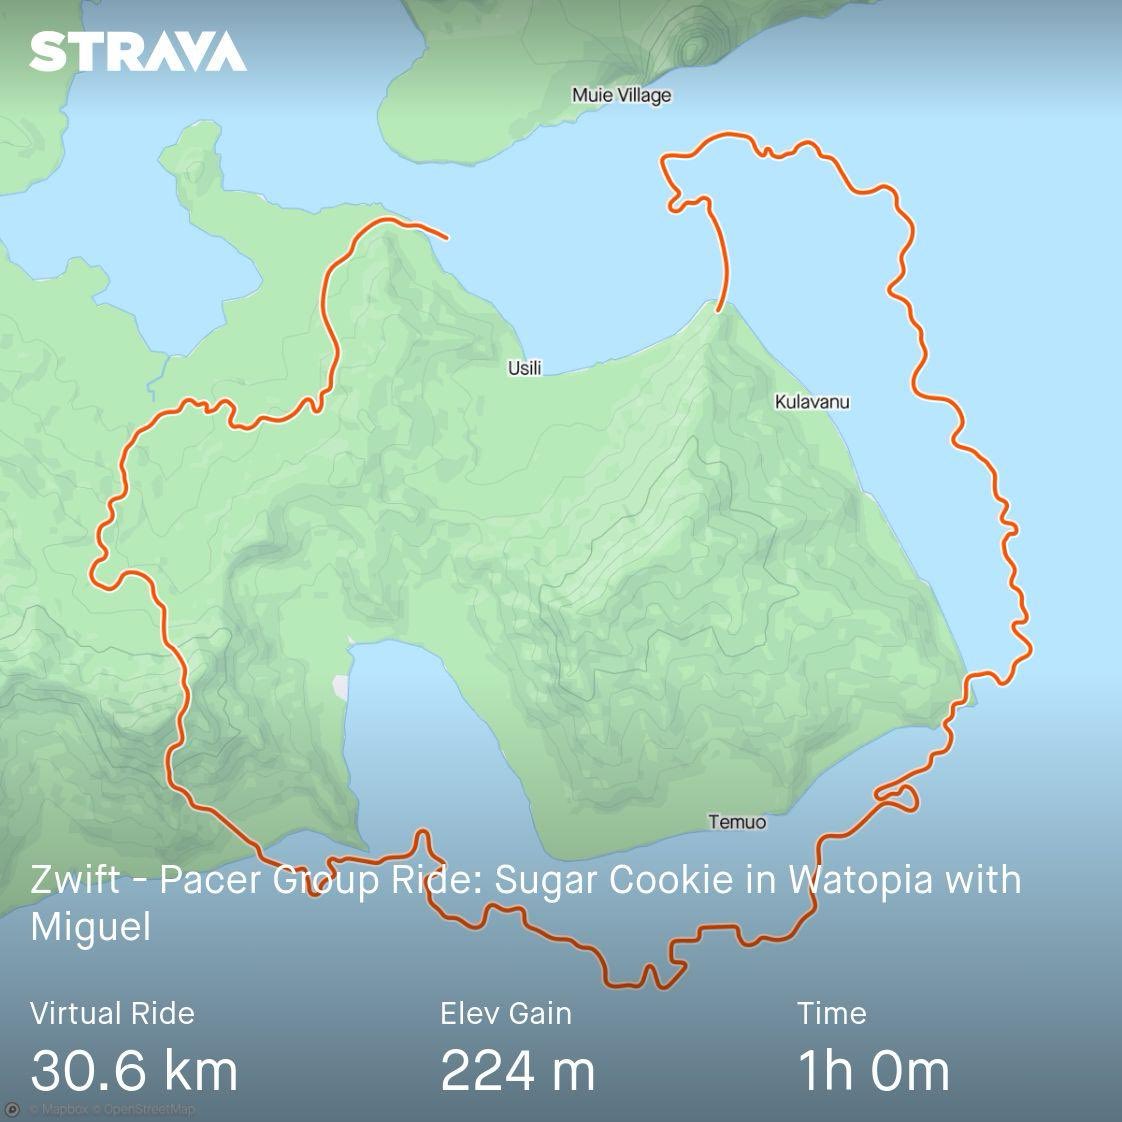 #zwift #gozwift #strava #wahoo #kickr #garmin #beatyesterday #strava #wahooligan #cycling 

Check out my activity on Strava.
strava.app.link/gWhtEUfj0Ib